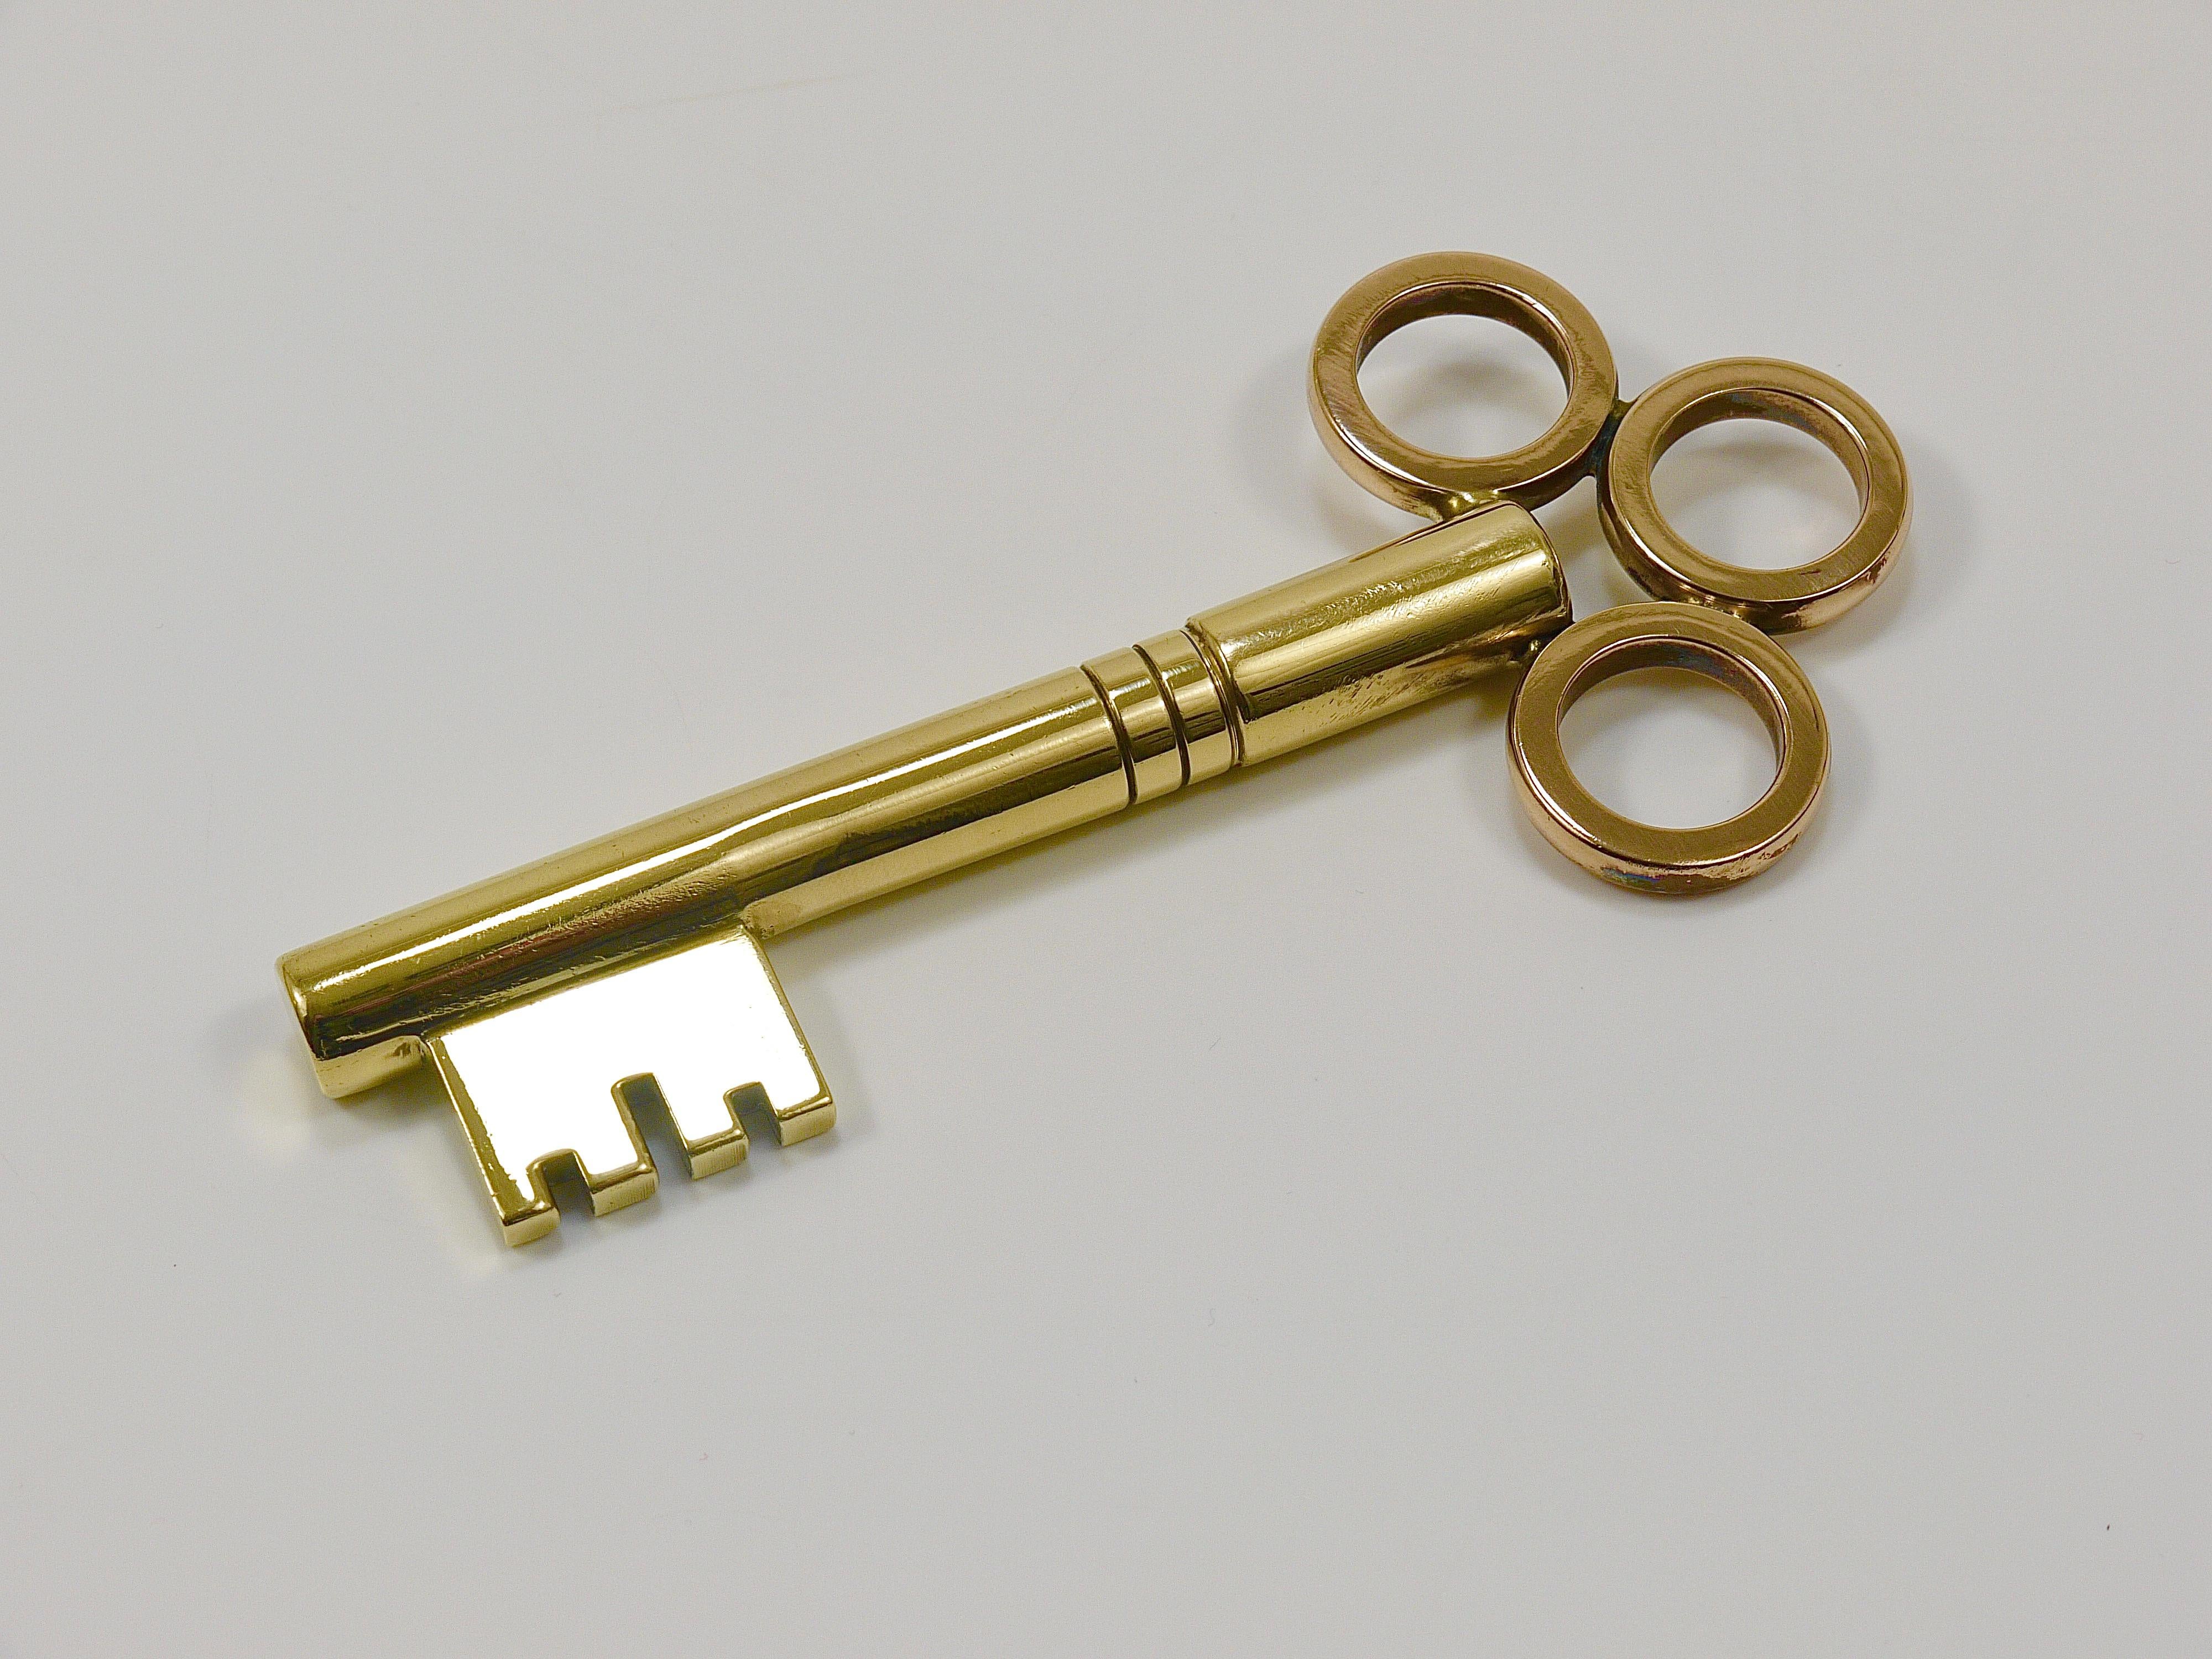 Large Carl Aubock Brass Key Corkscrew Bottle Opener Paperweight, Austria, 1950s For Sale 2